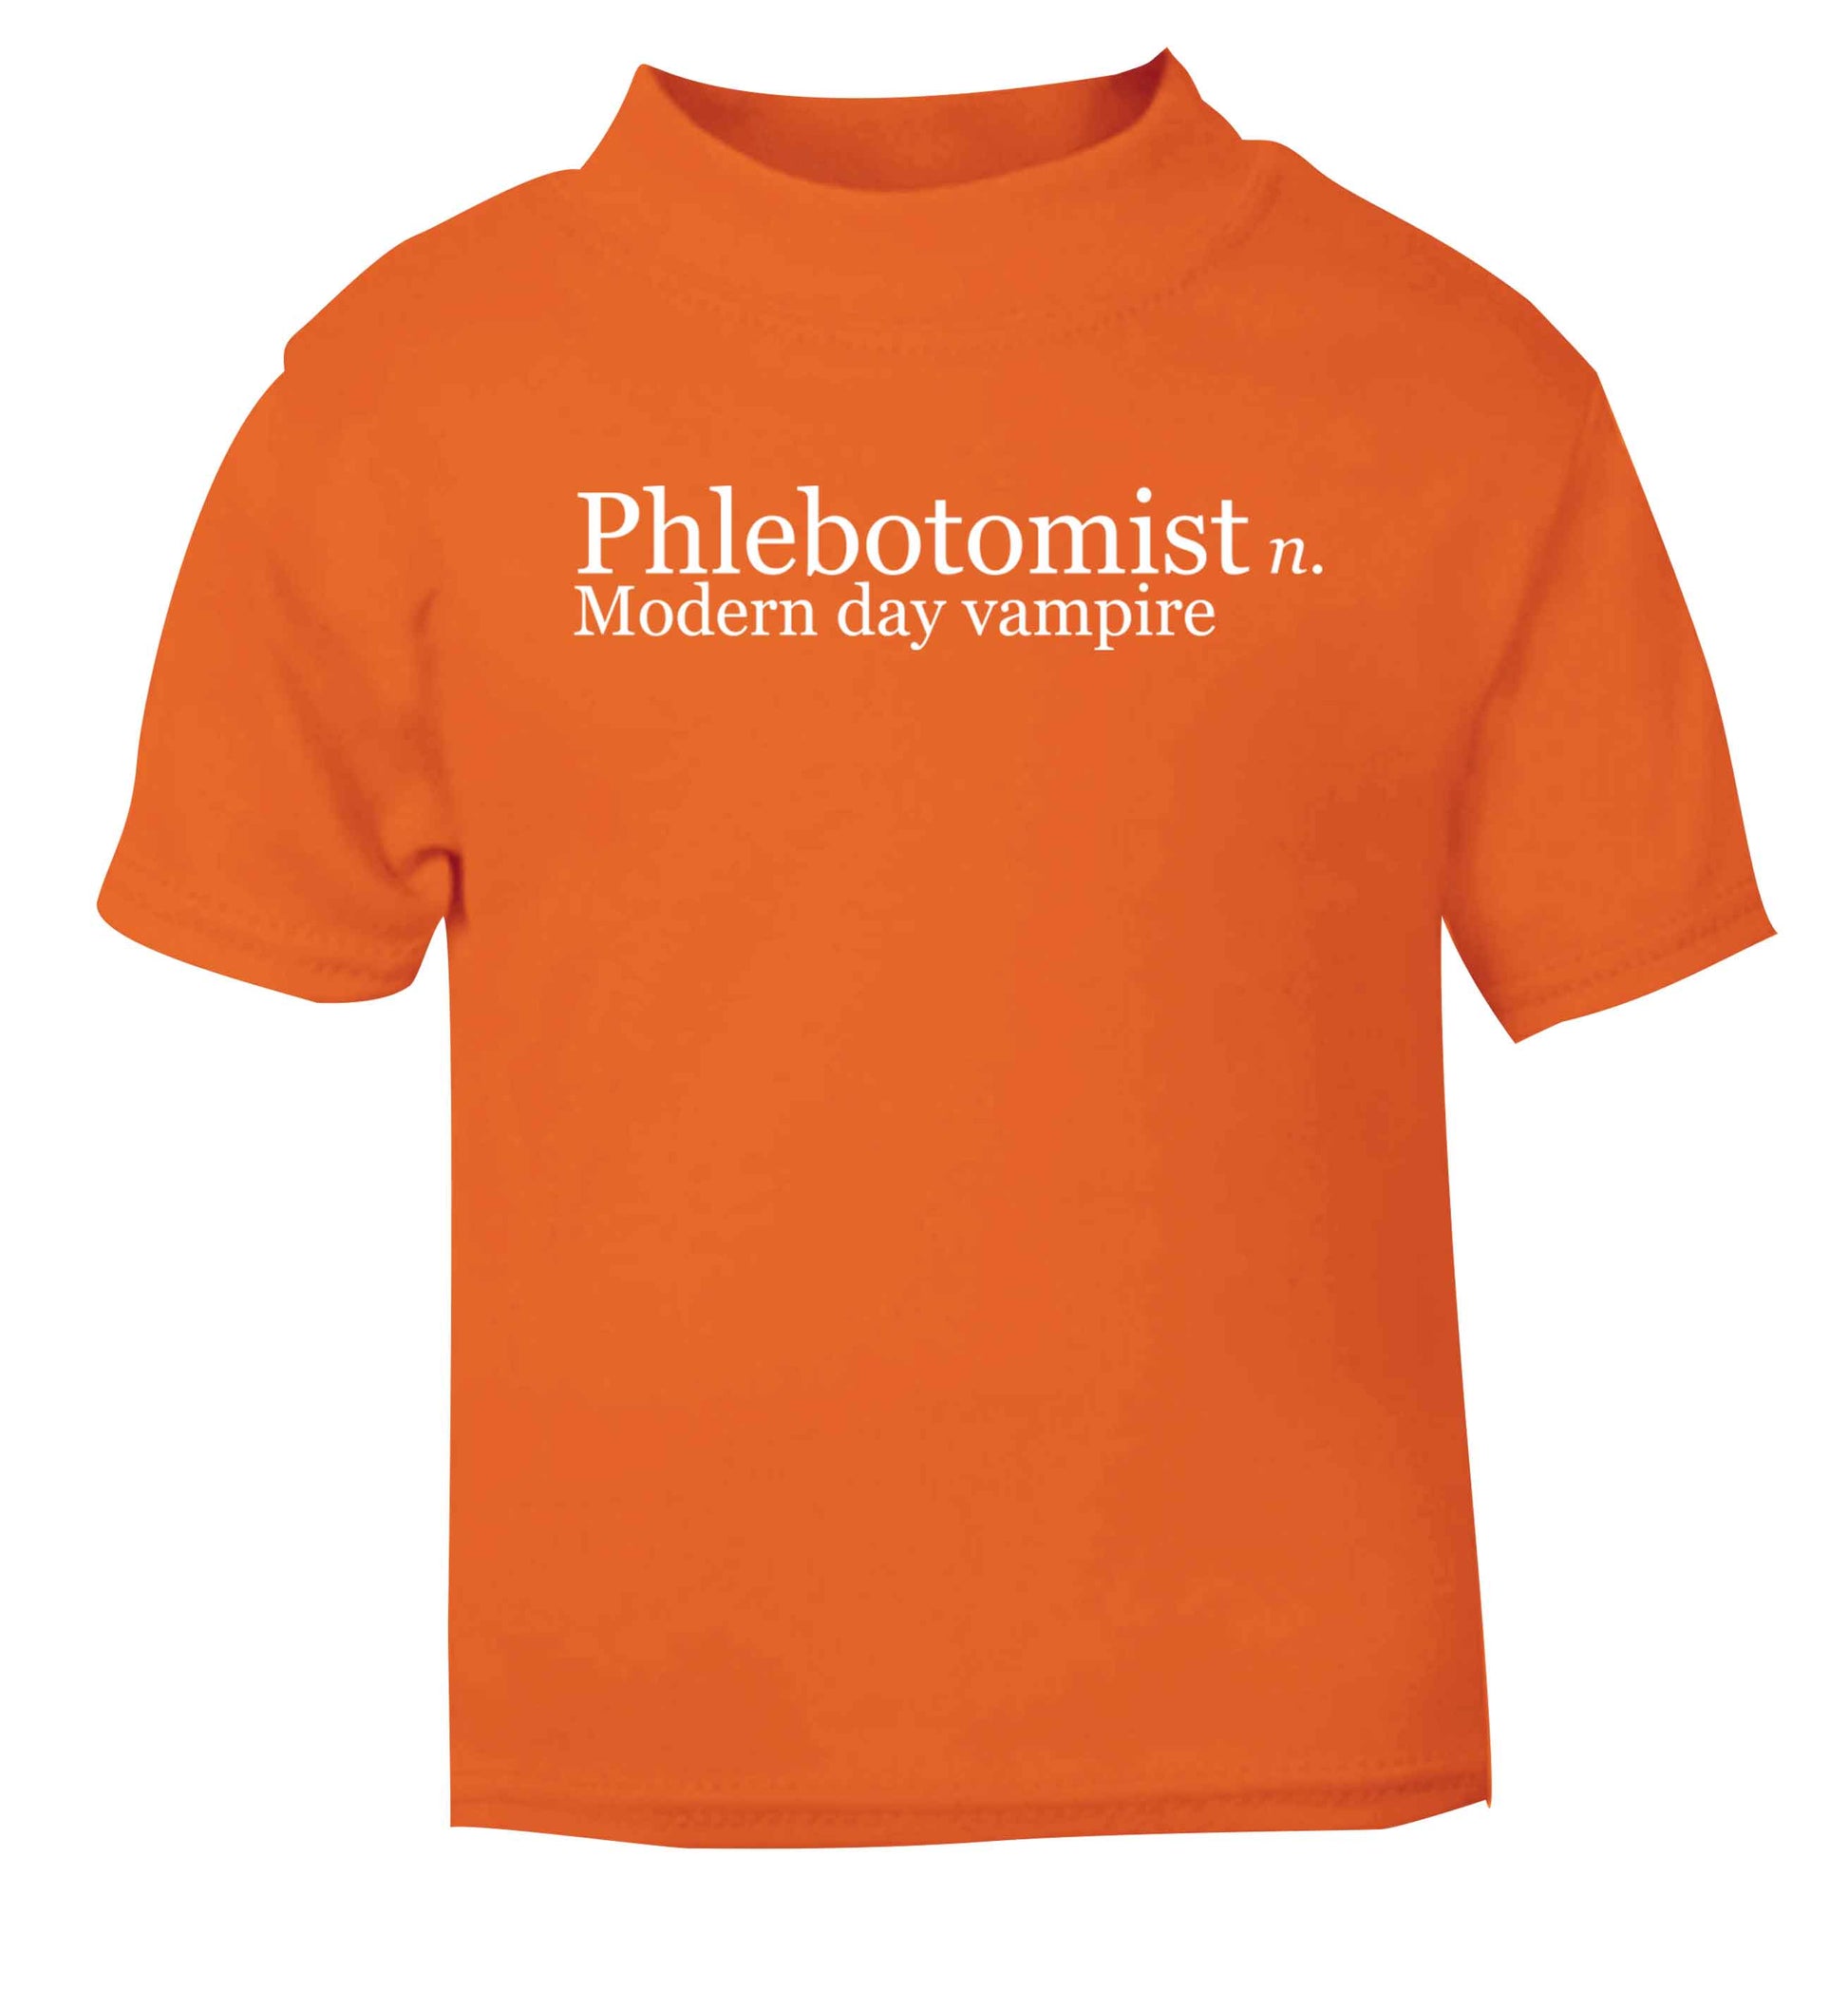 Phlebotomist - Modern day vampire orange baby toddler Tshirt 2 Years